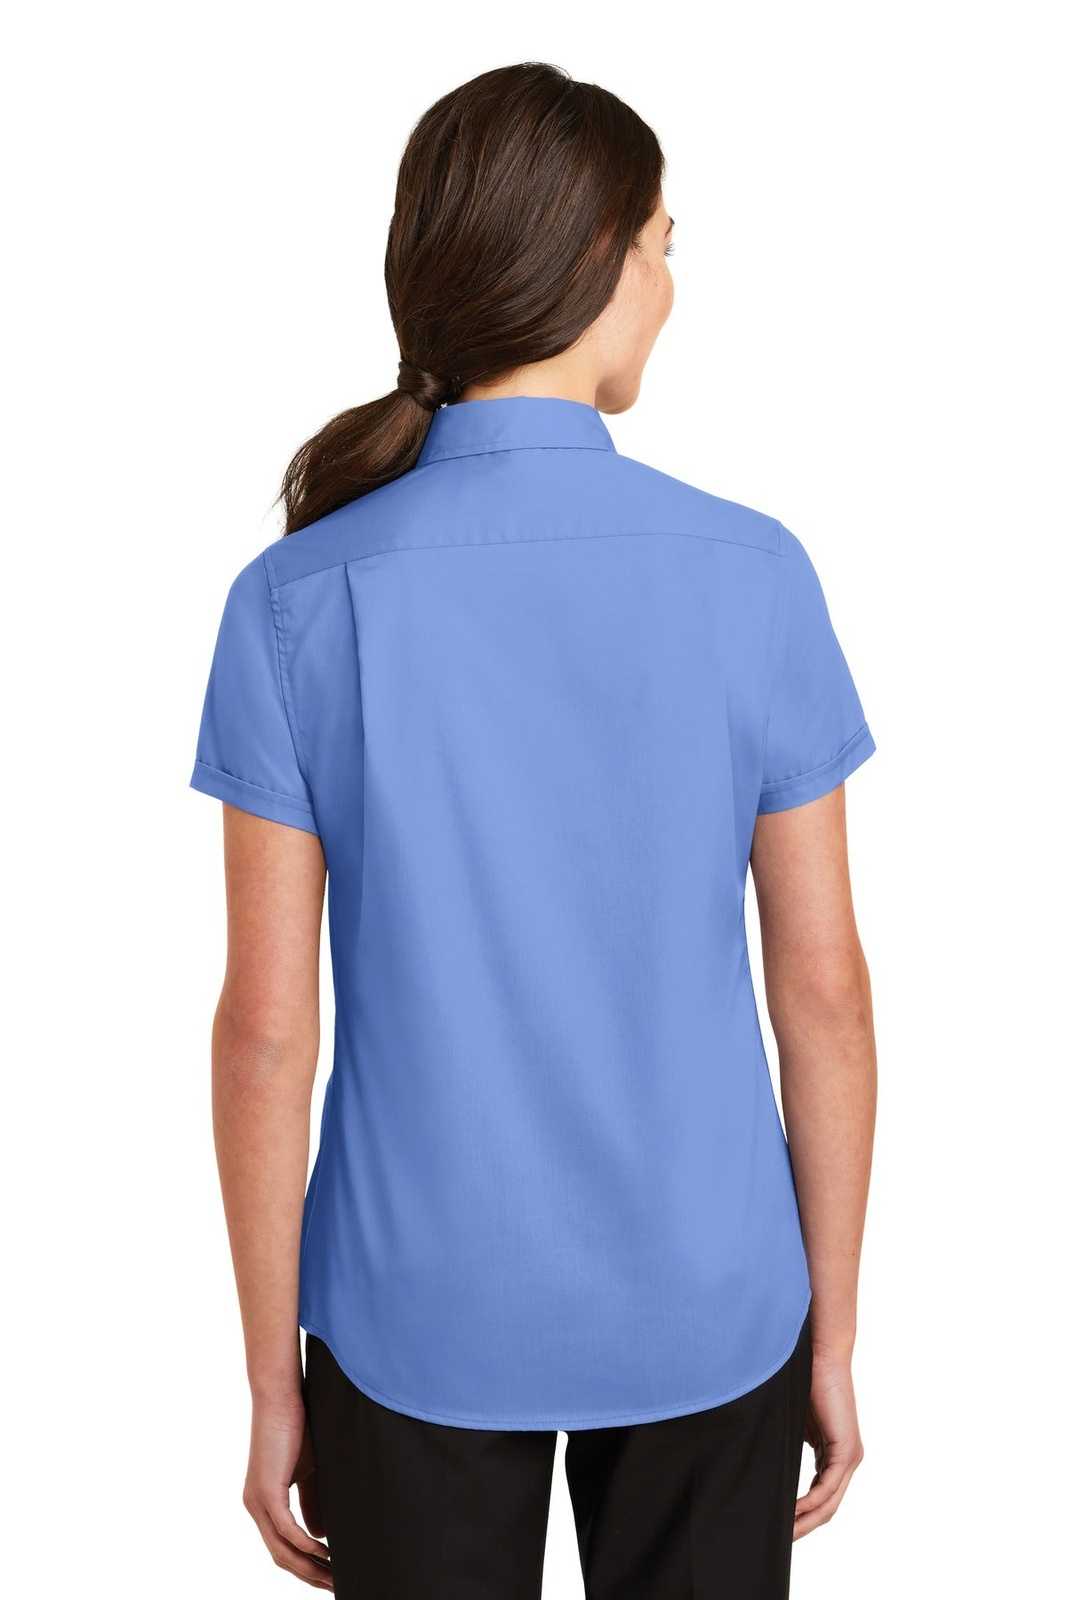 Port Authority L664 Ladies Short Sleeve Superpro Twill Shirt - Ultramarine Blue - HIT a Double - 2